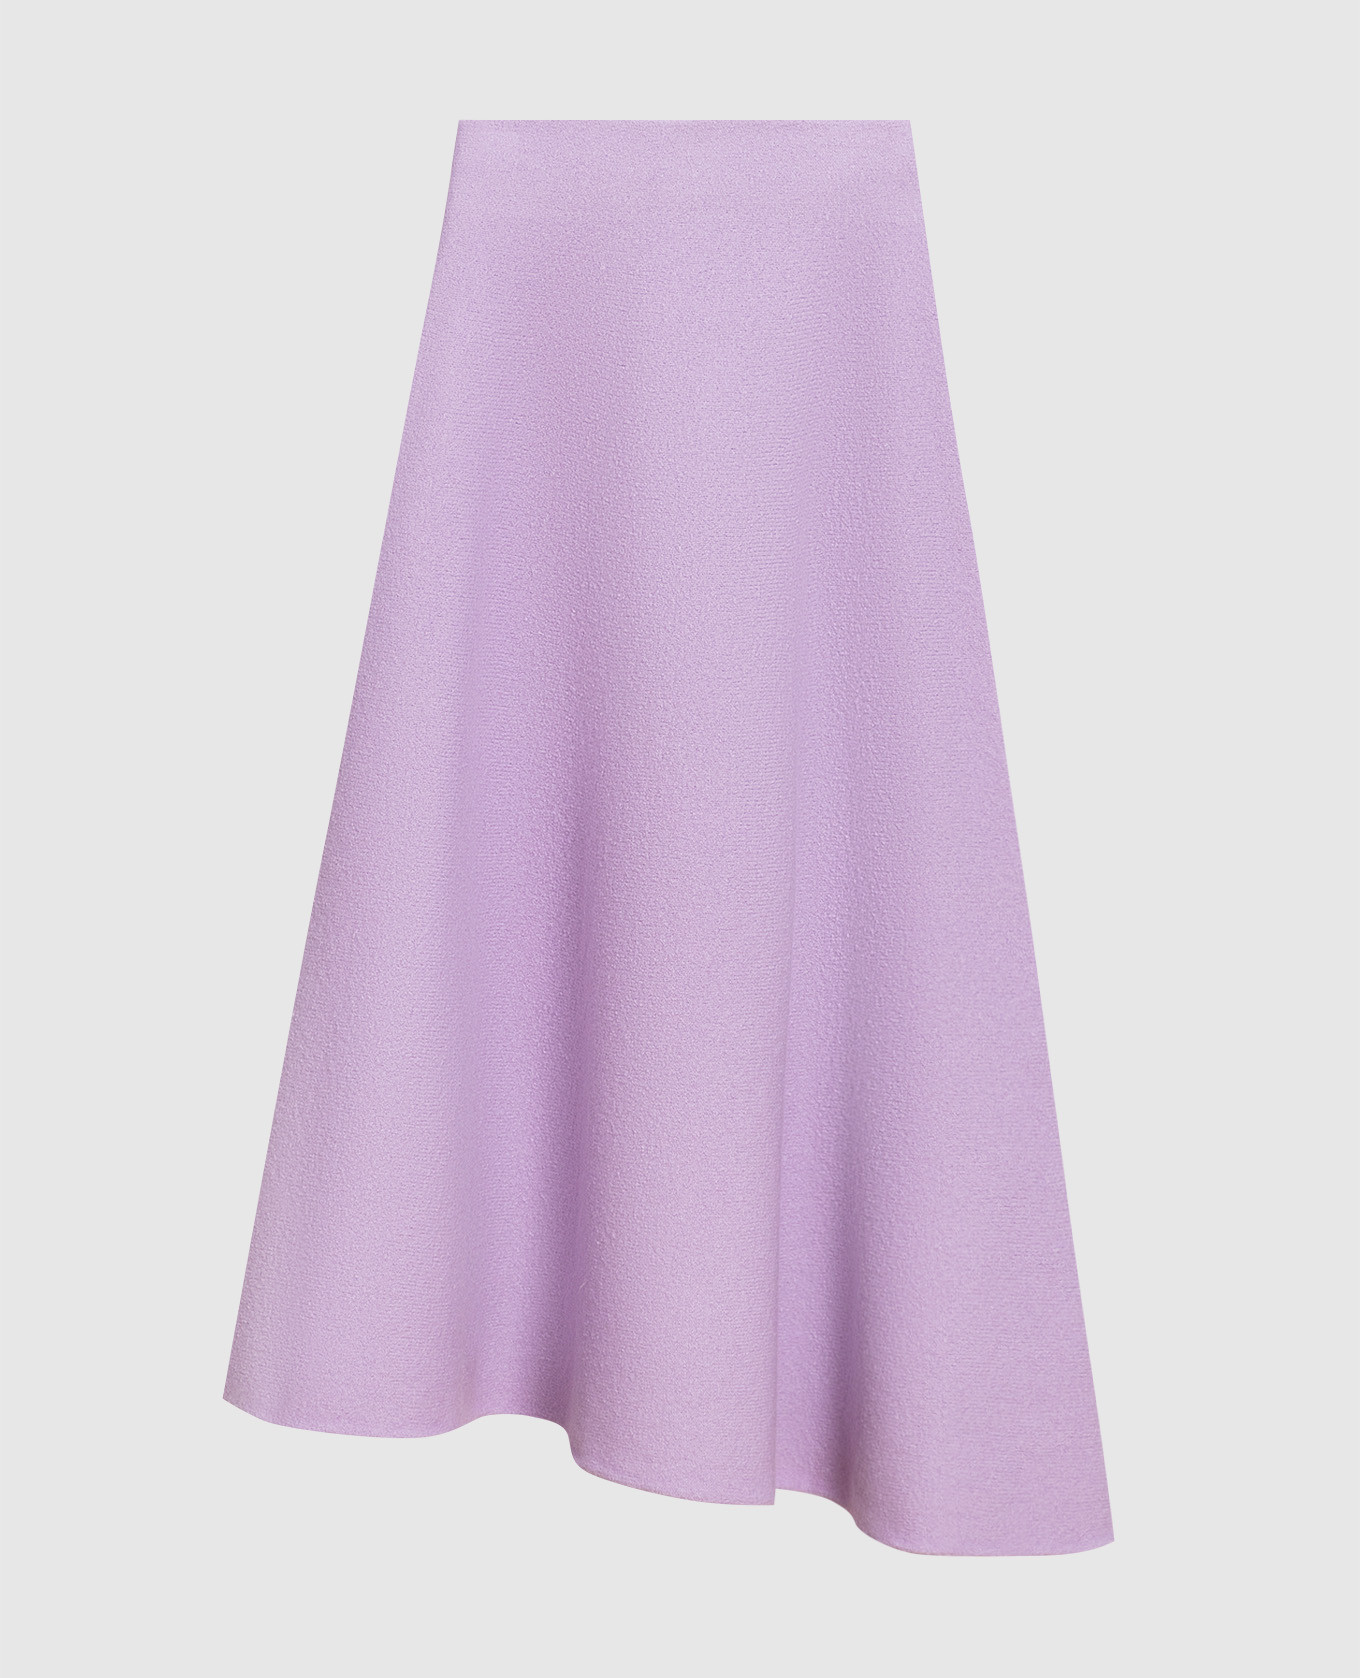 Purple skirt made of wool